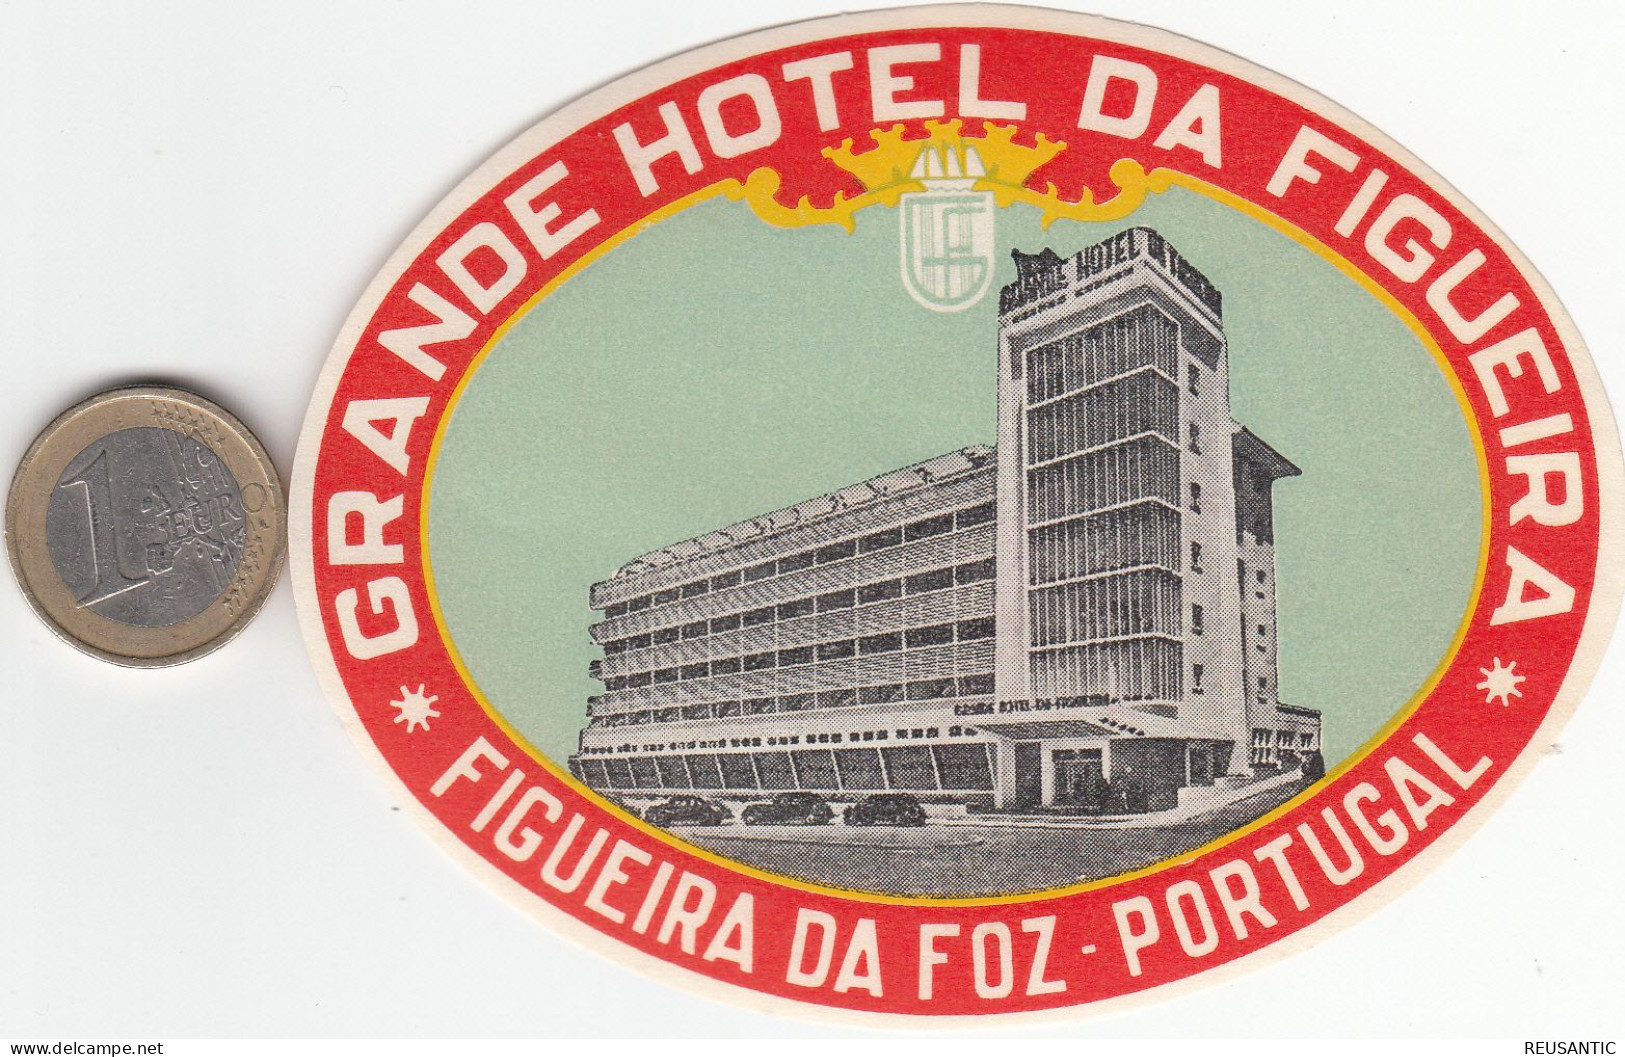 ETIQUETA - STICKER - LUGGAGE LABEL PORTUGAL HOTEL GRANDE PORTUGAL EN FIGUEIRA DA FOZ - Hotel Labels